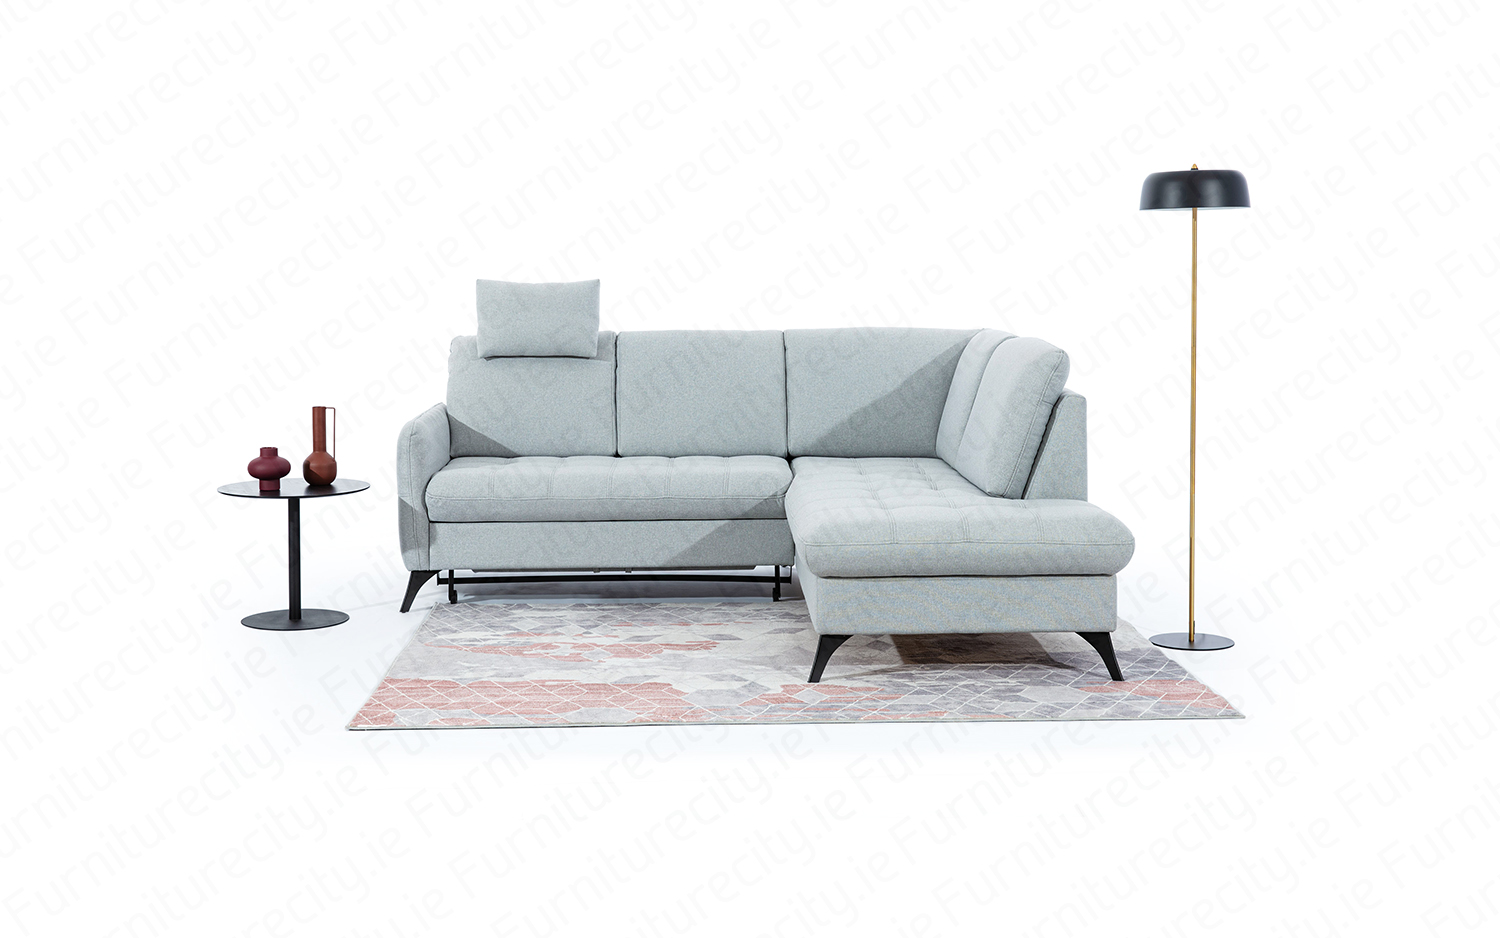 Sofa bed LORI OPEN by Furniturecity.ie